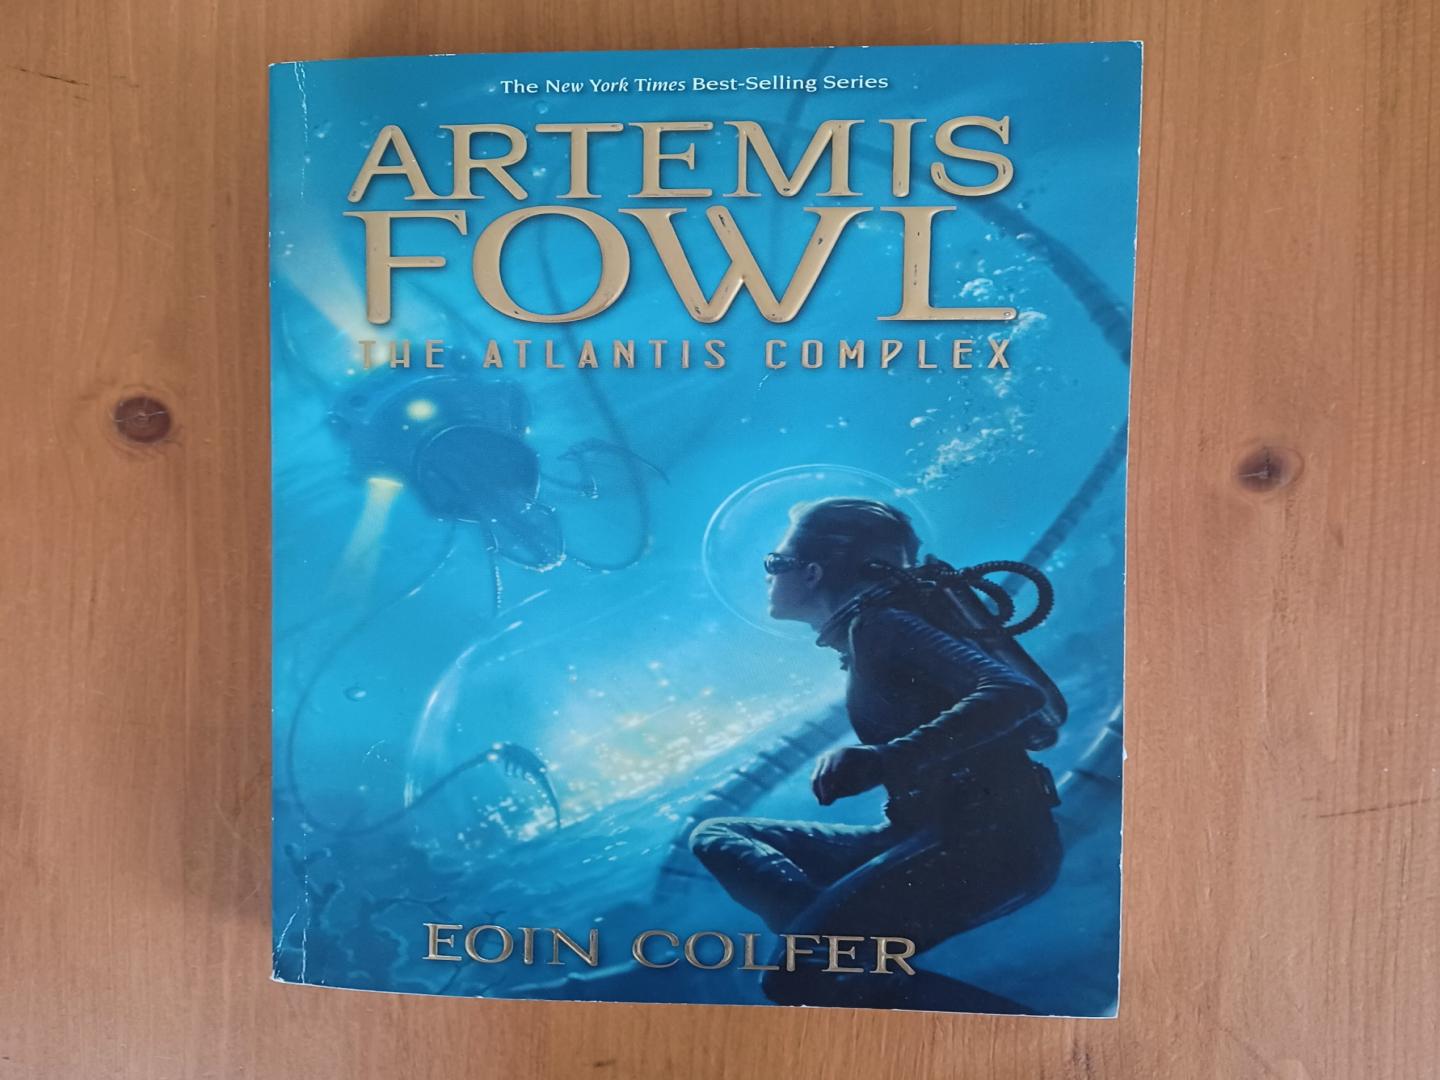 Colfer, Eoin - Artemis Fowl - The Atlantis Complex